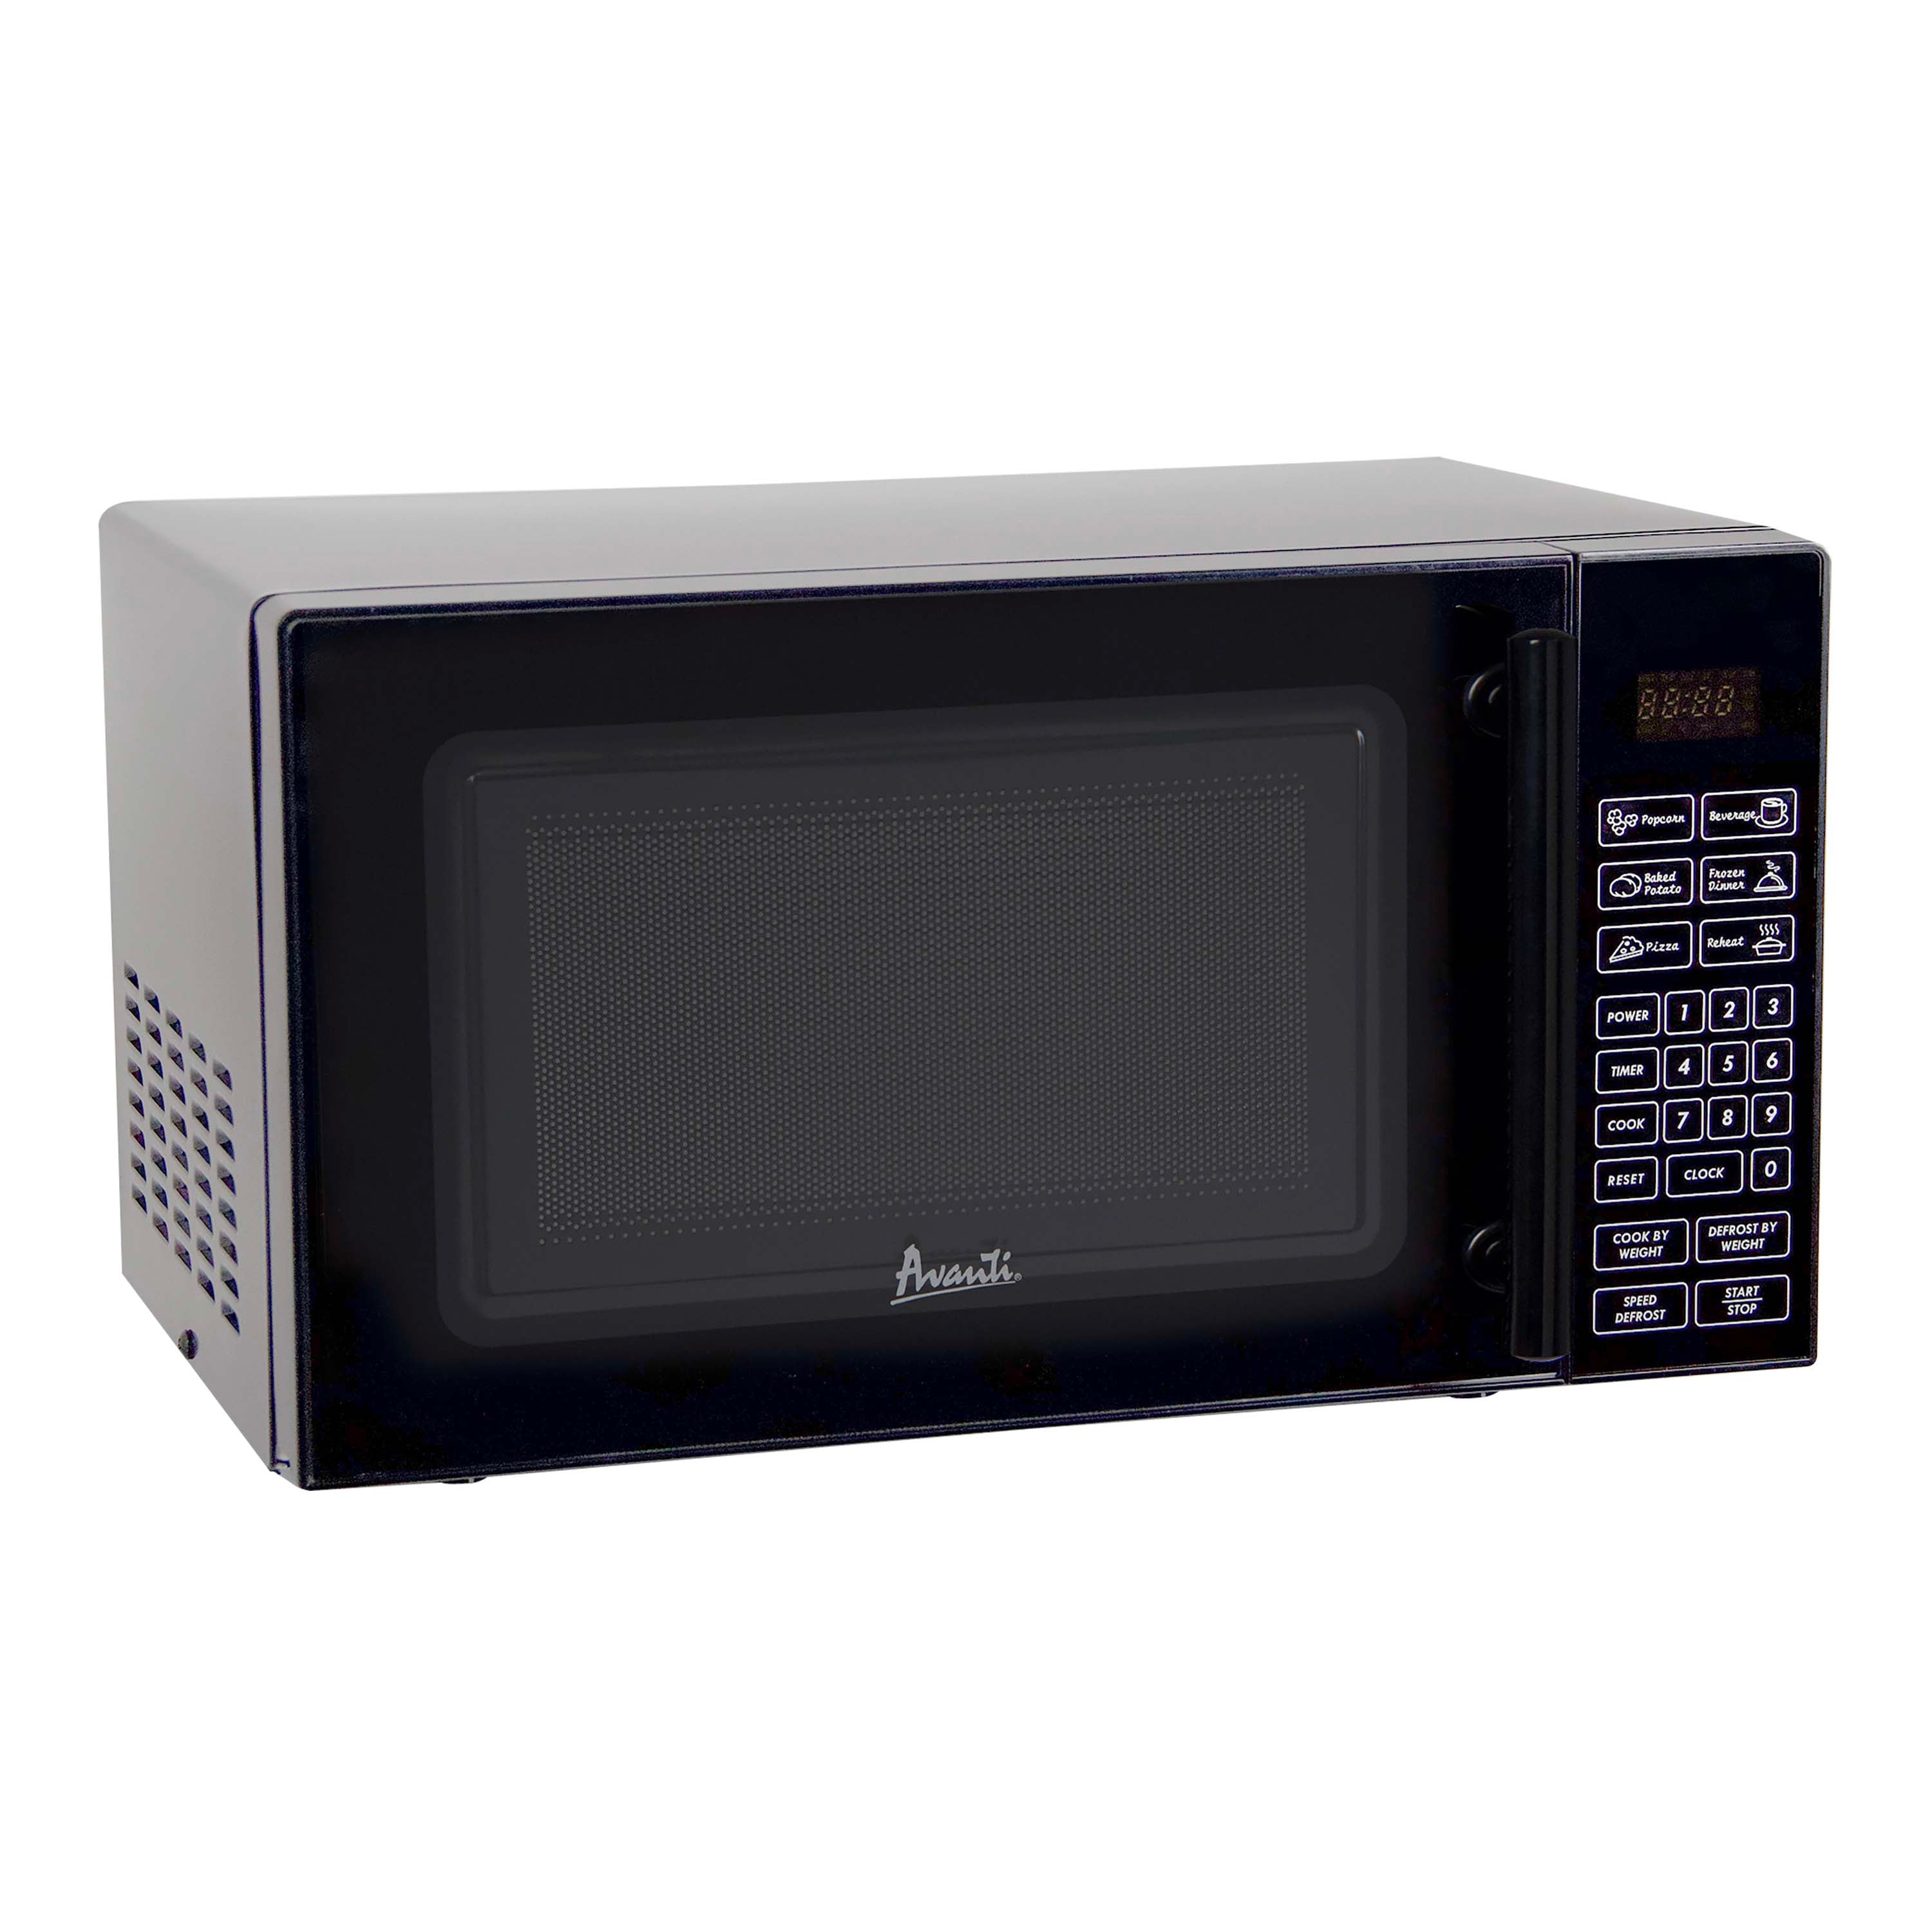 Avanti - MT81K1BH, Countertop Microwave Oven, 0.8 cu. ft. Capacity, in Black